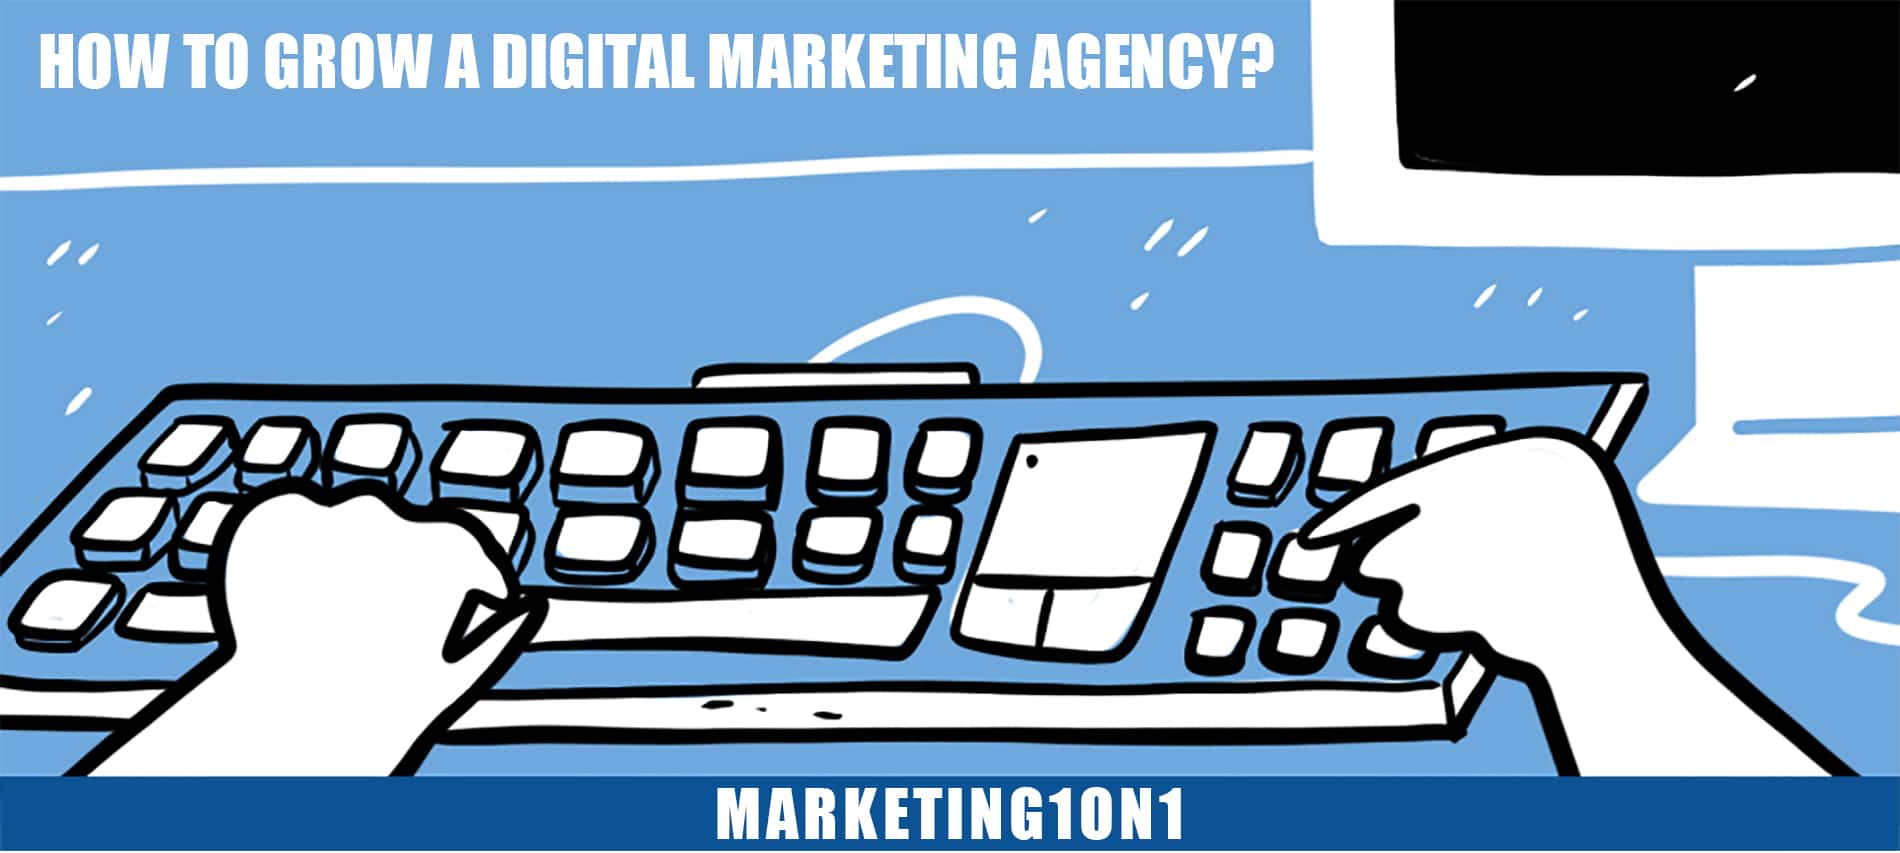 How to grow a digital marketing agency?